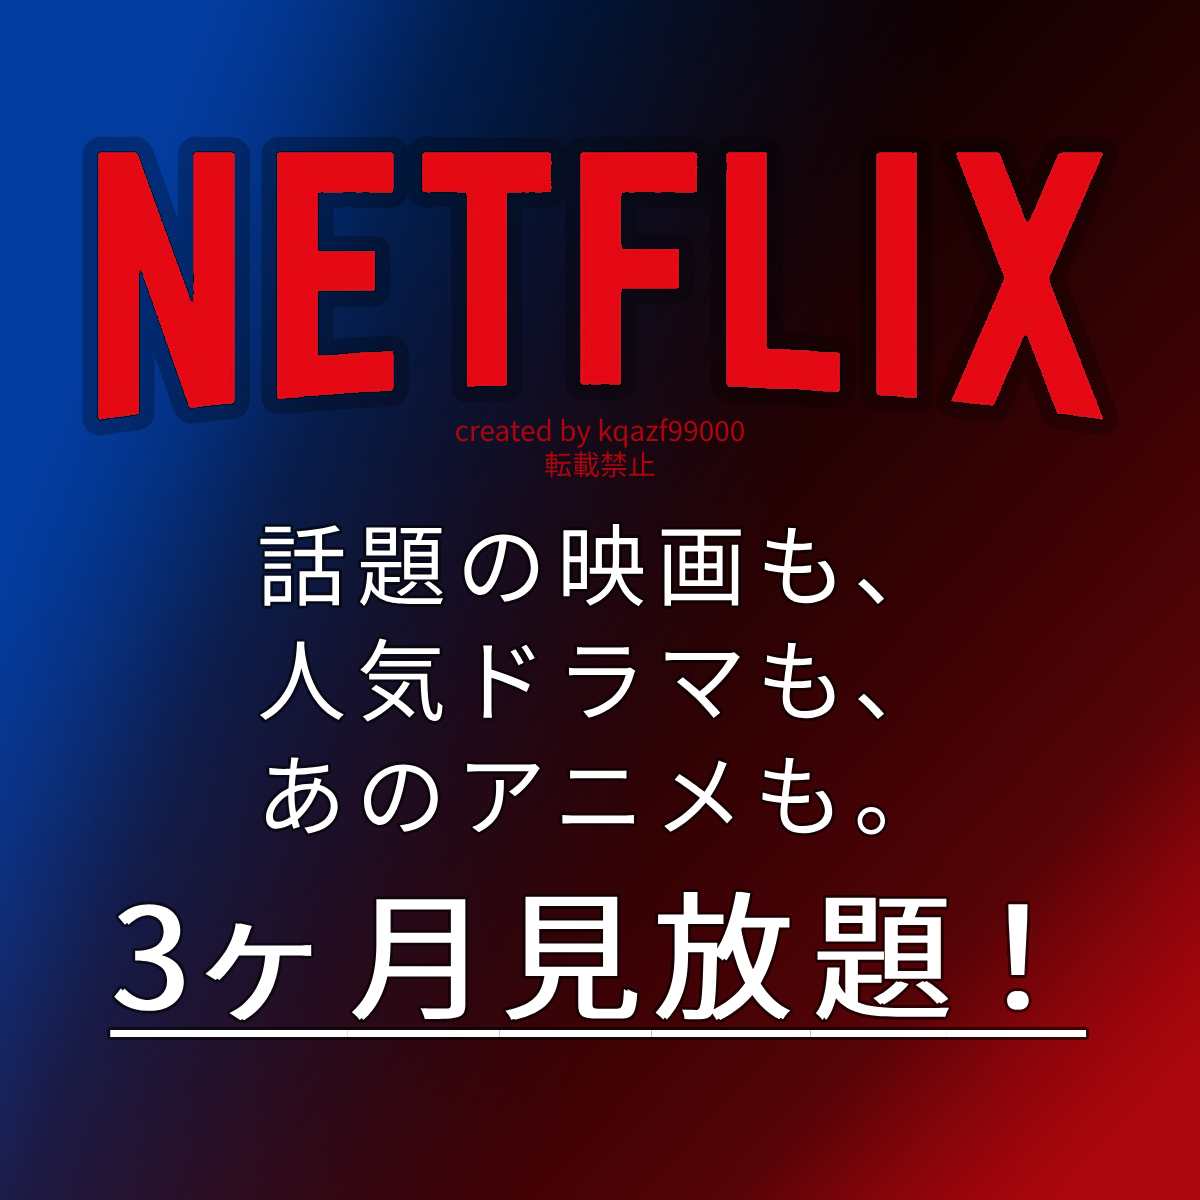 Netflix Premium 3ヶ月 スマートテレビ Fire stick tv Android IOS 4K UHD 対応 進撃の巨人 幽遊白書 キッズ ファミリー向け 韓流 作品有_画像1